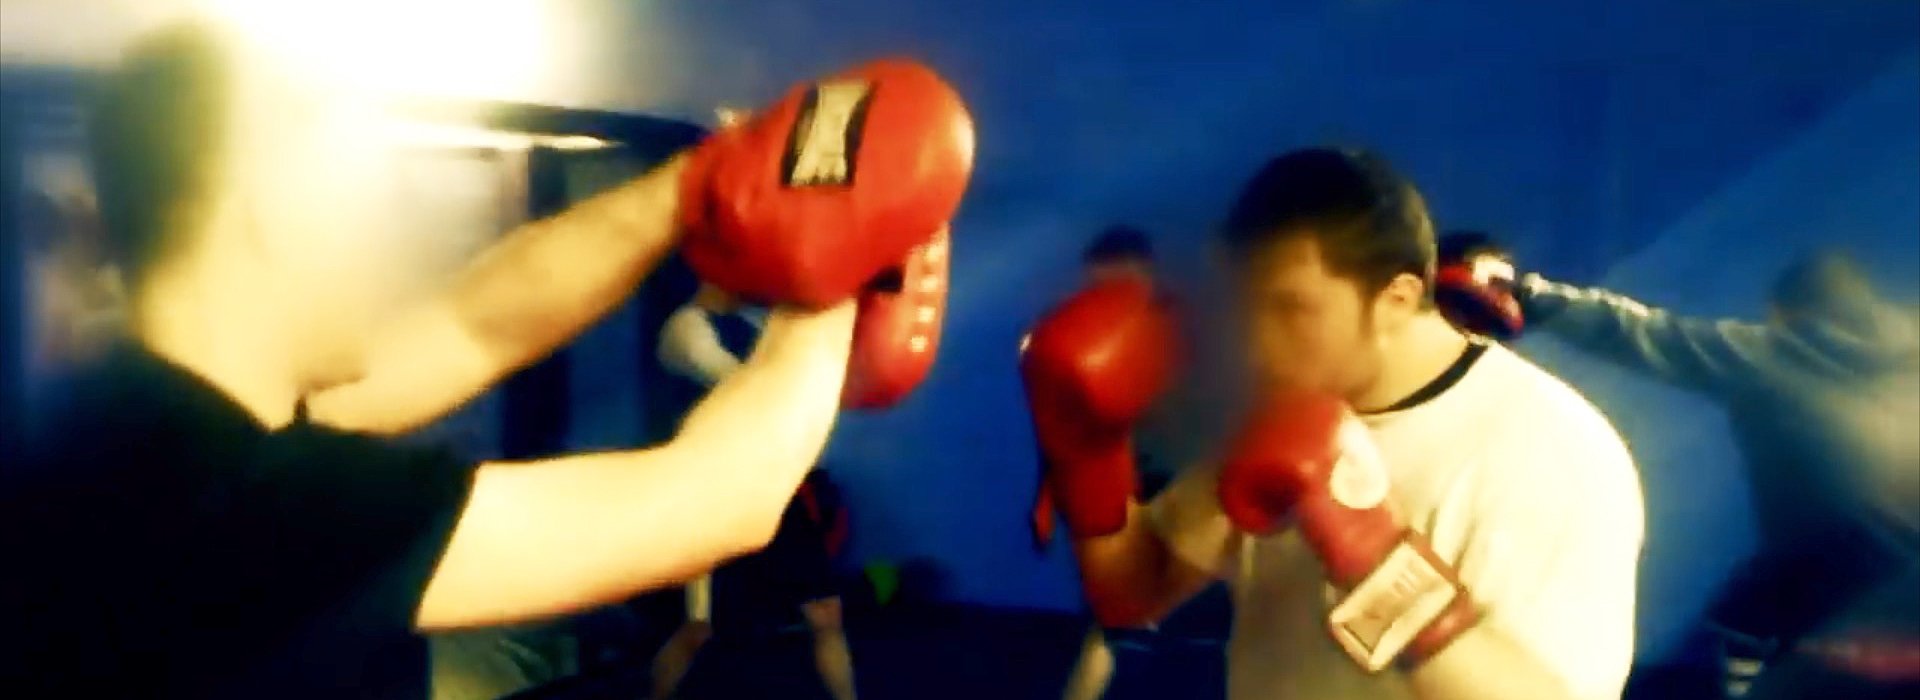 Jack Renshaw practicando boxeo